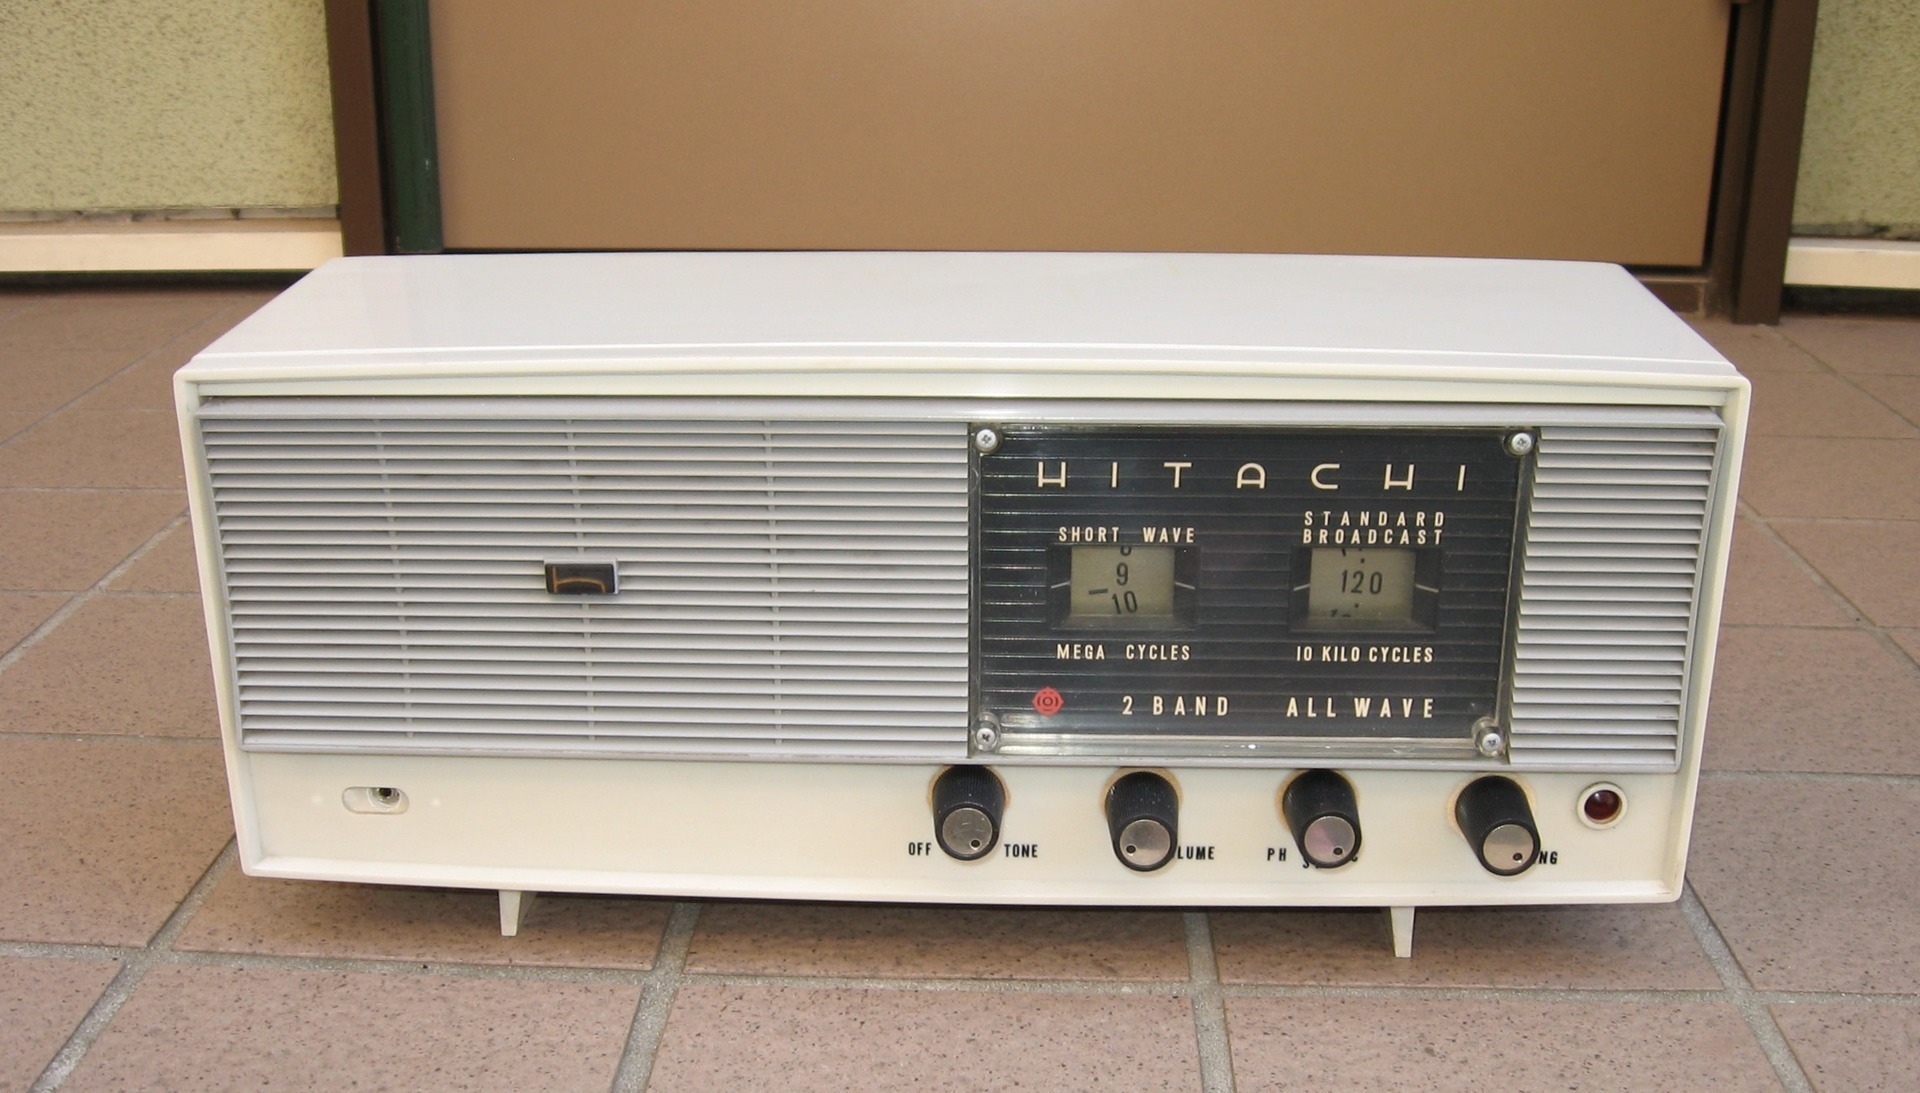 HITACHI AM/FM Radio 大型の真空管ラジオです - ラジオ